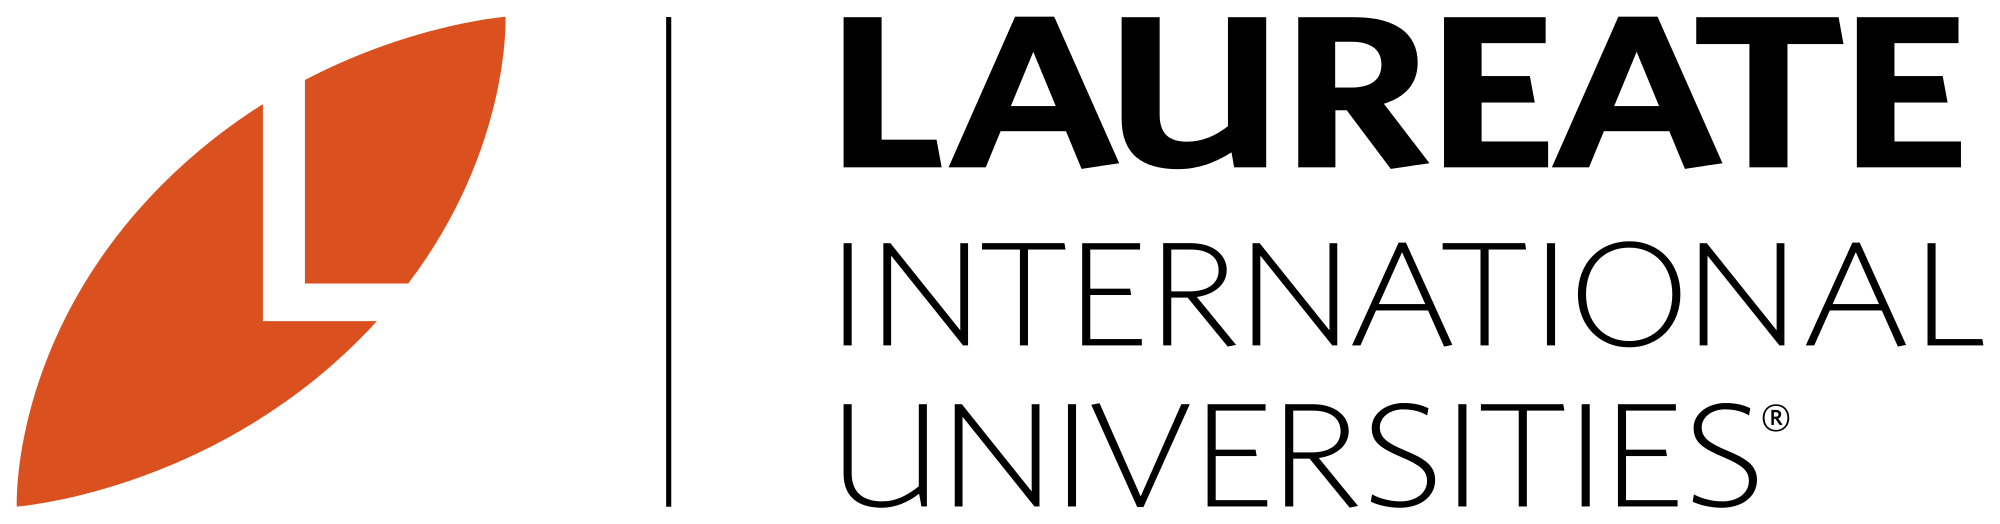 Laureate_Education_Logo.svg (1).png